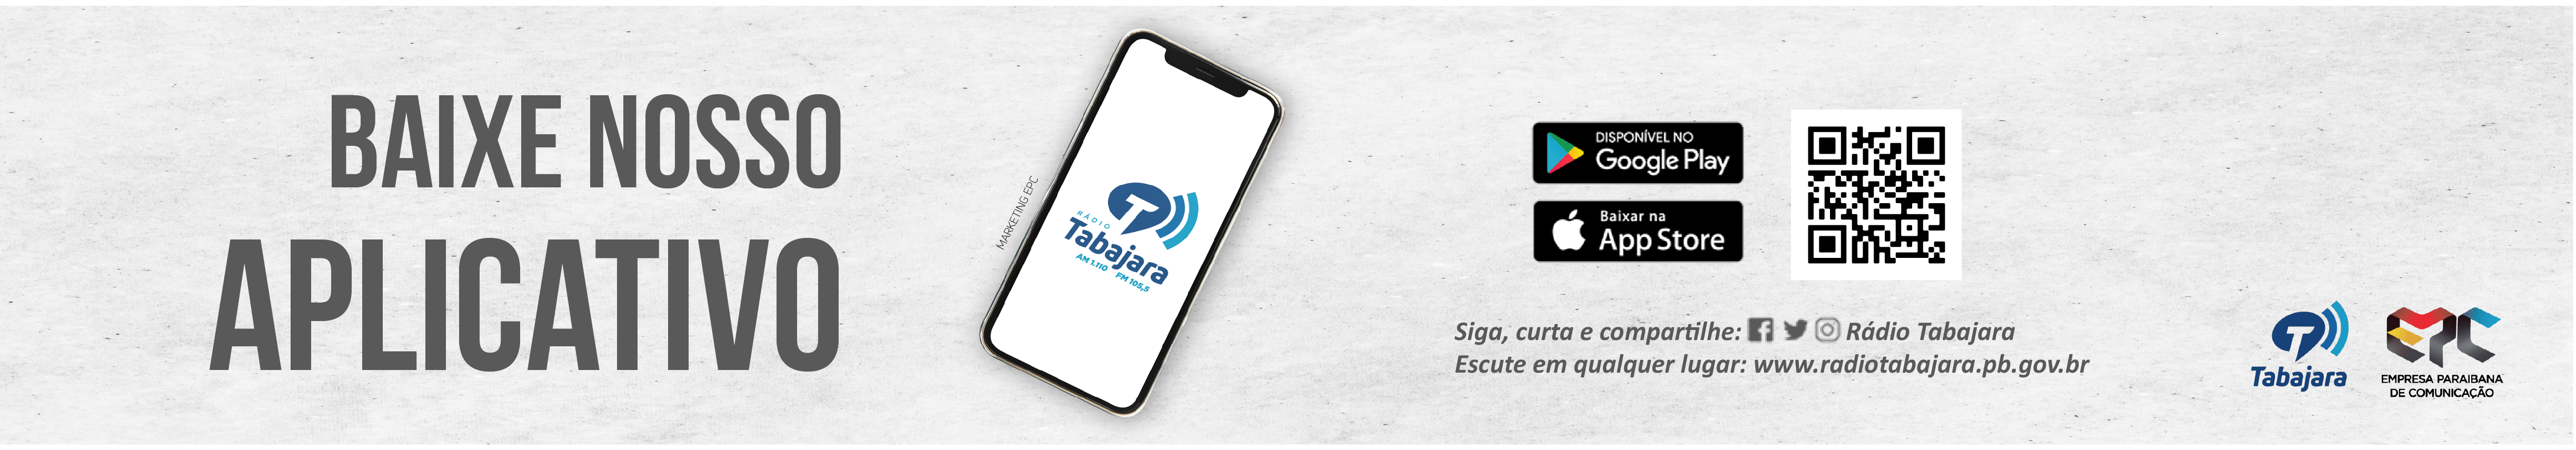 Banner de download do aplicativo da Rádio Tabajara.